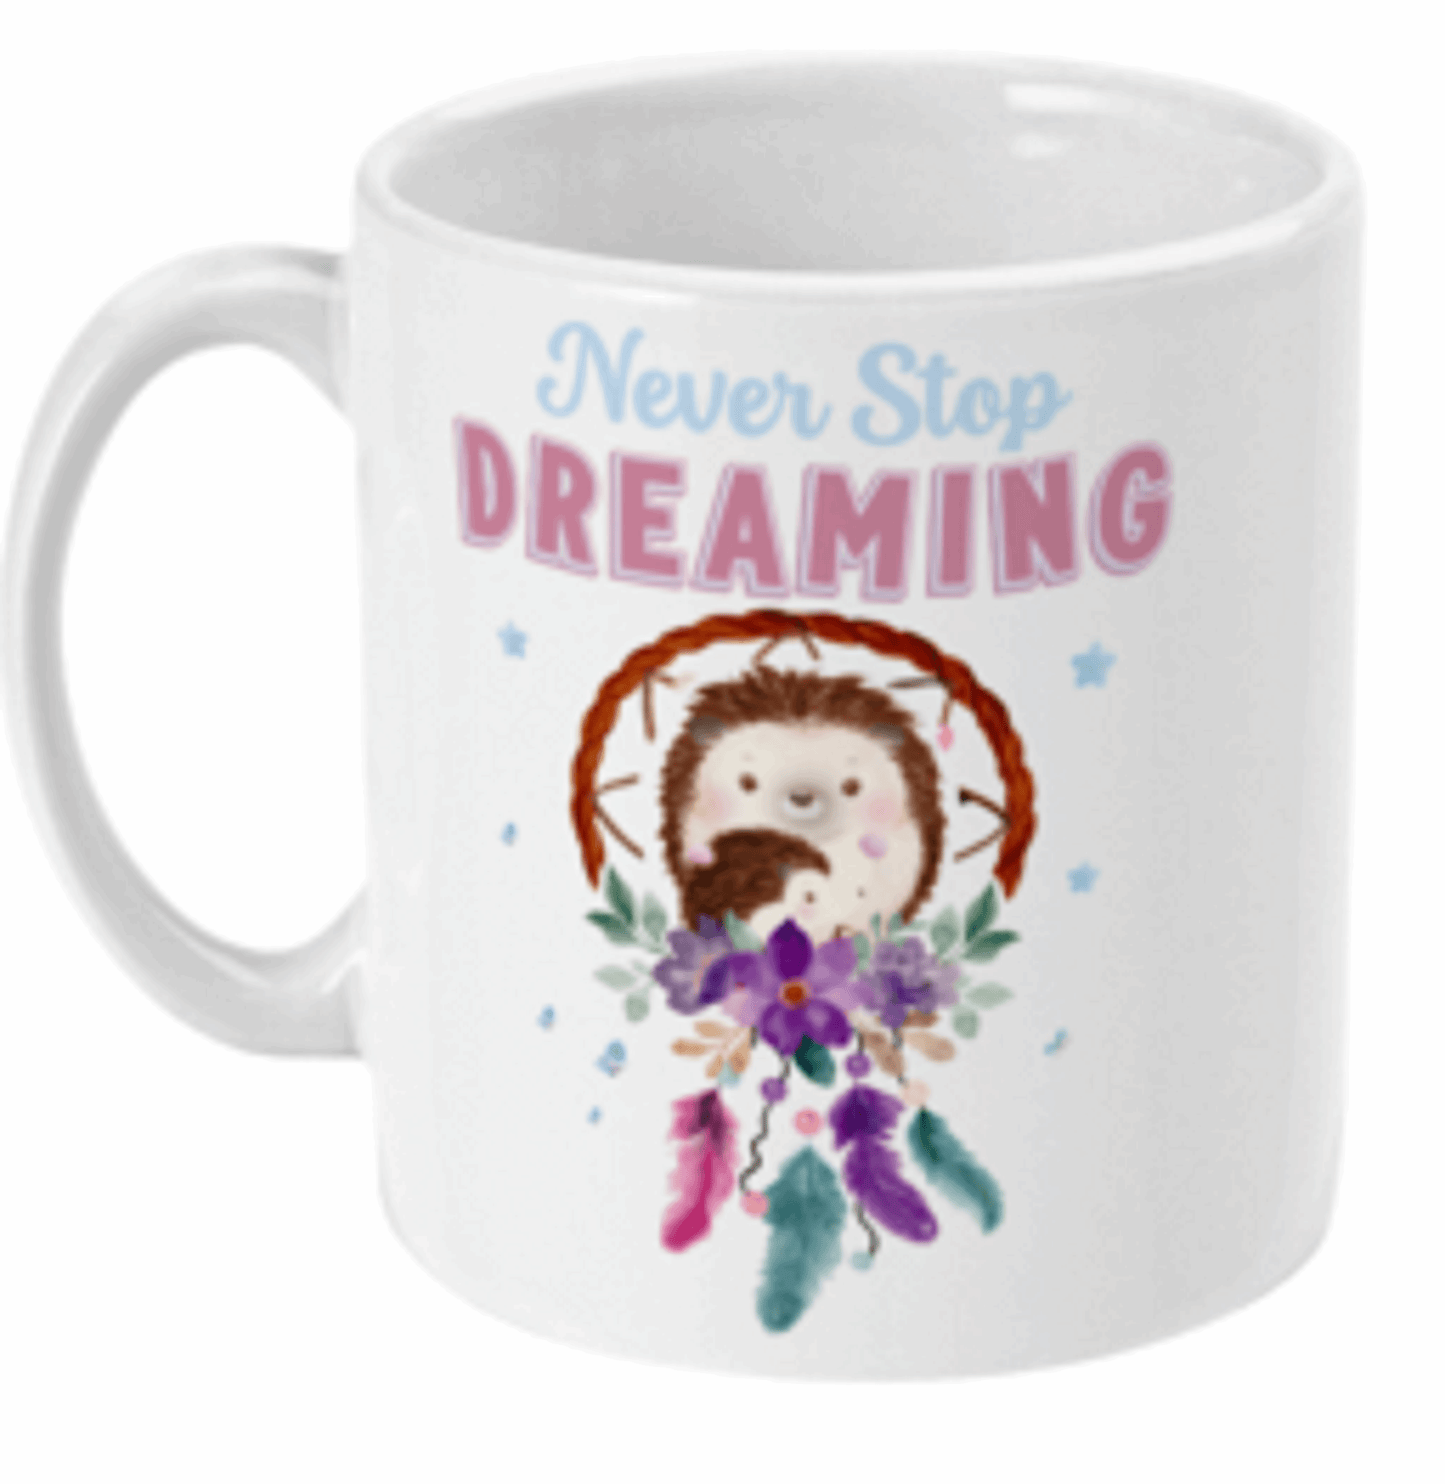  Never Stop Dreaming Hedgehog Coffee Mug by Free Spirit Accessories sold by Free Spirit Accessories